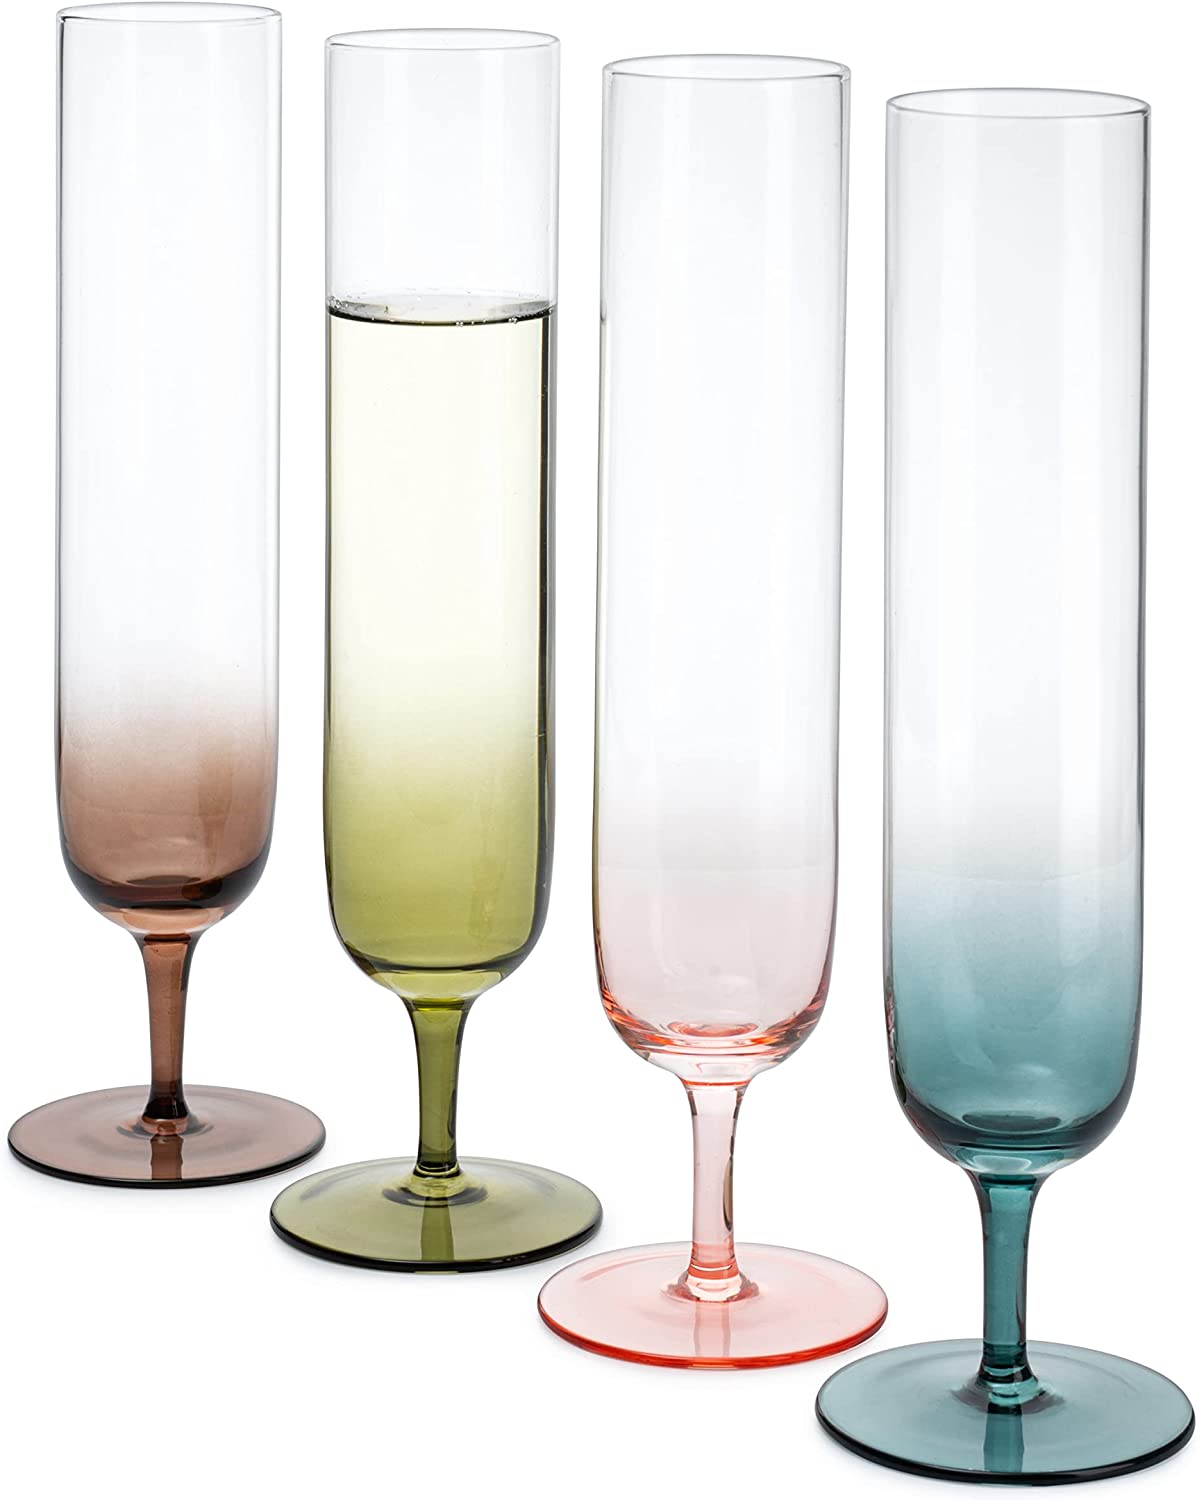 Dusk Champagne Flute Glassware, Set of 4